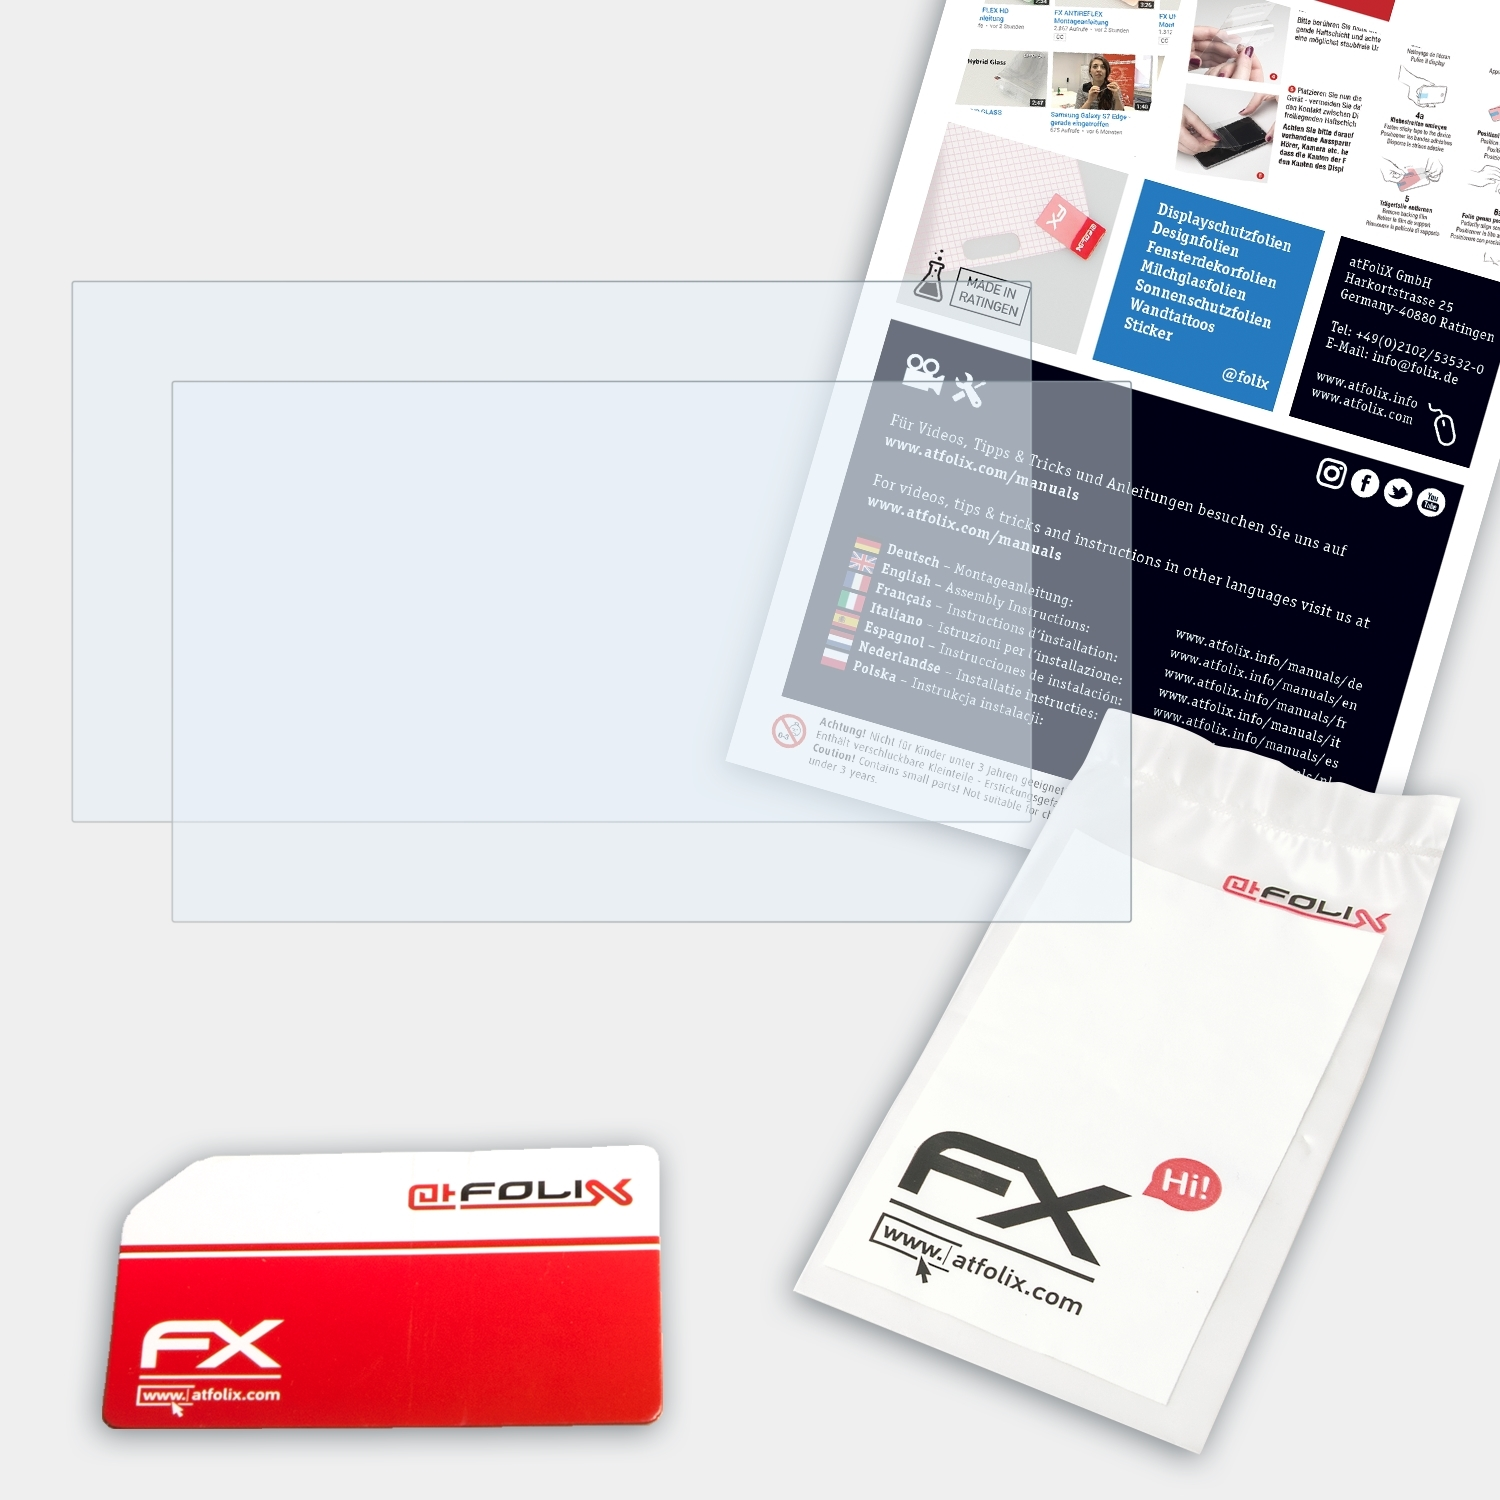 Asus FX-Clear 14 (X412FA)) 2x VivoBook ATFOLIX Displayschutz(für